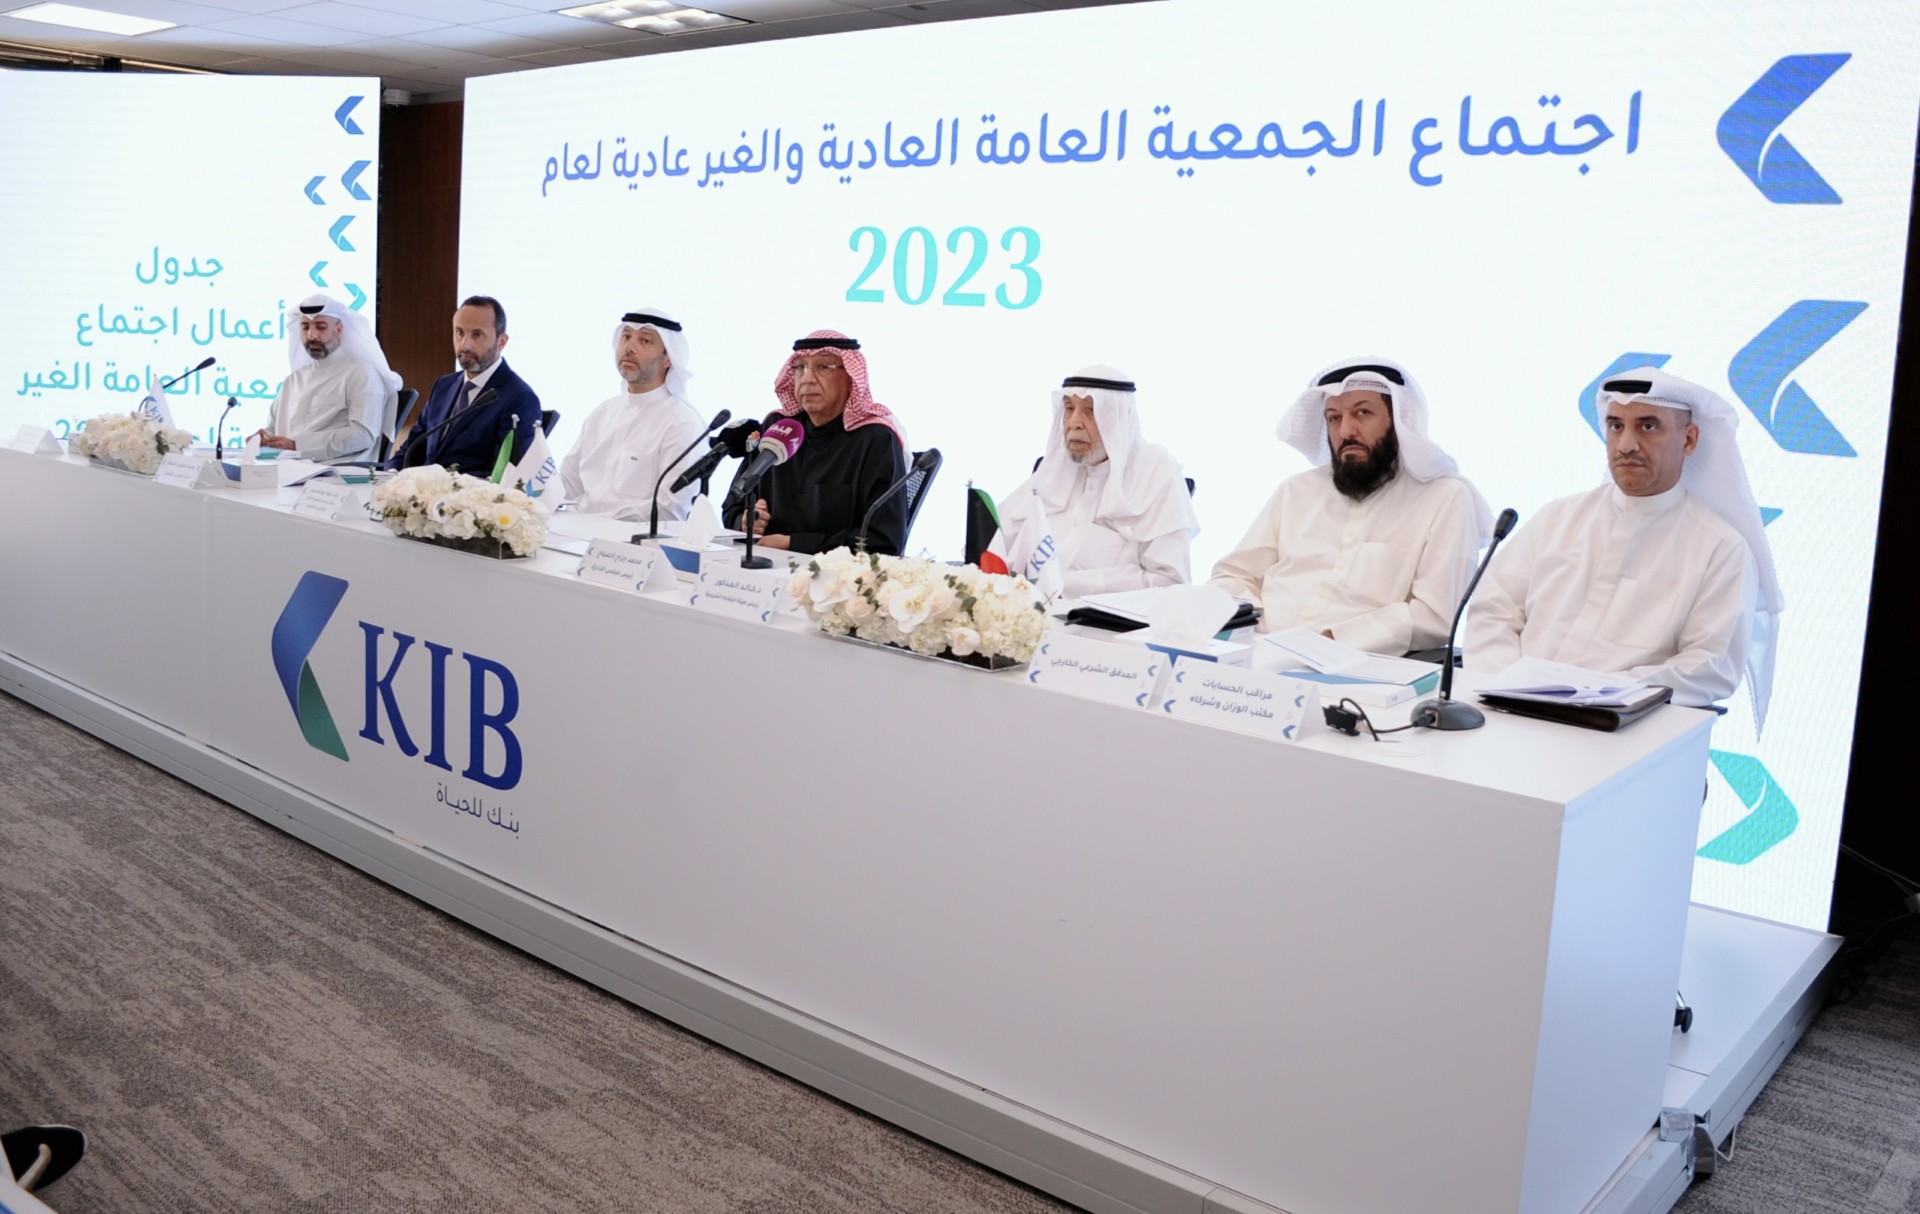 Kuwait International Bank (KIB) Annual General Meeting